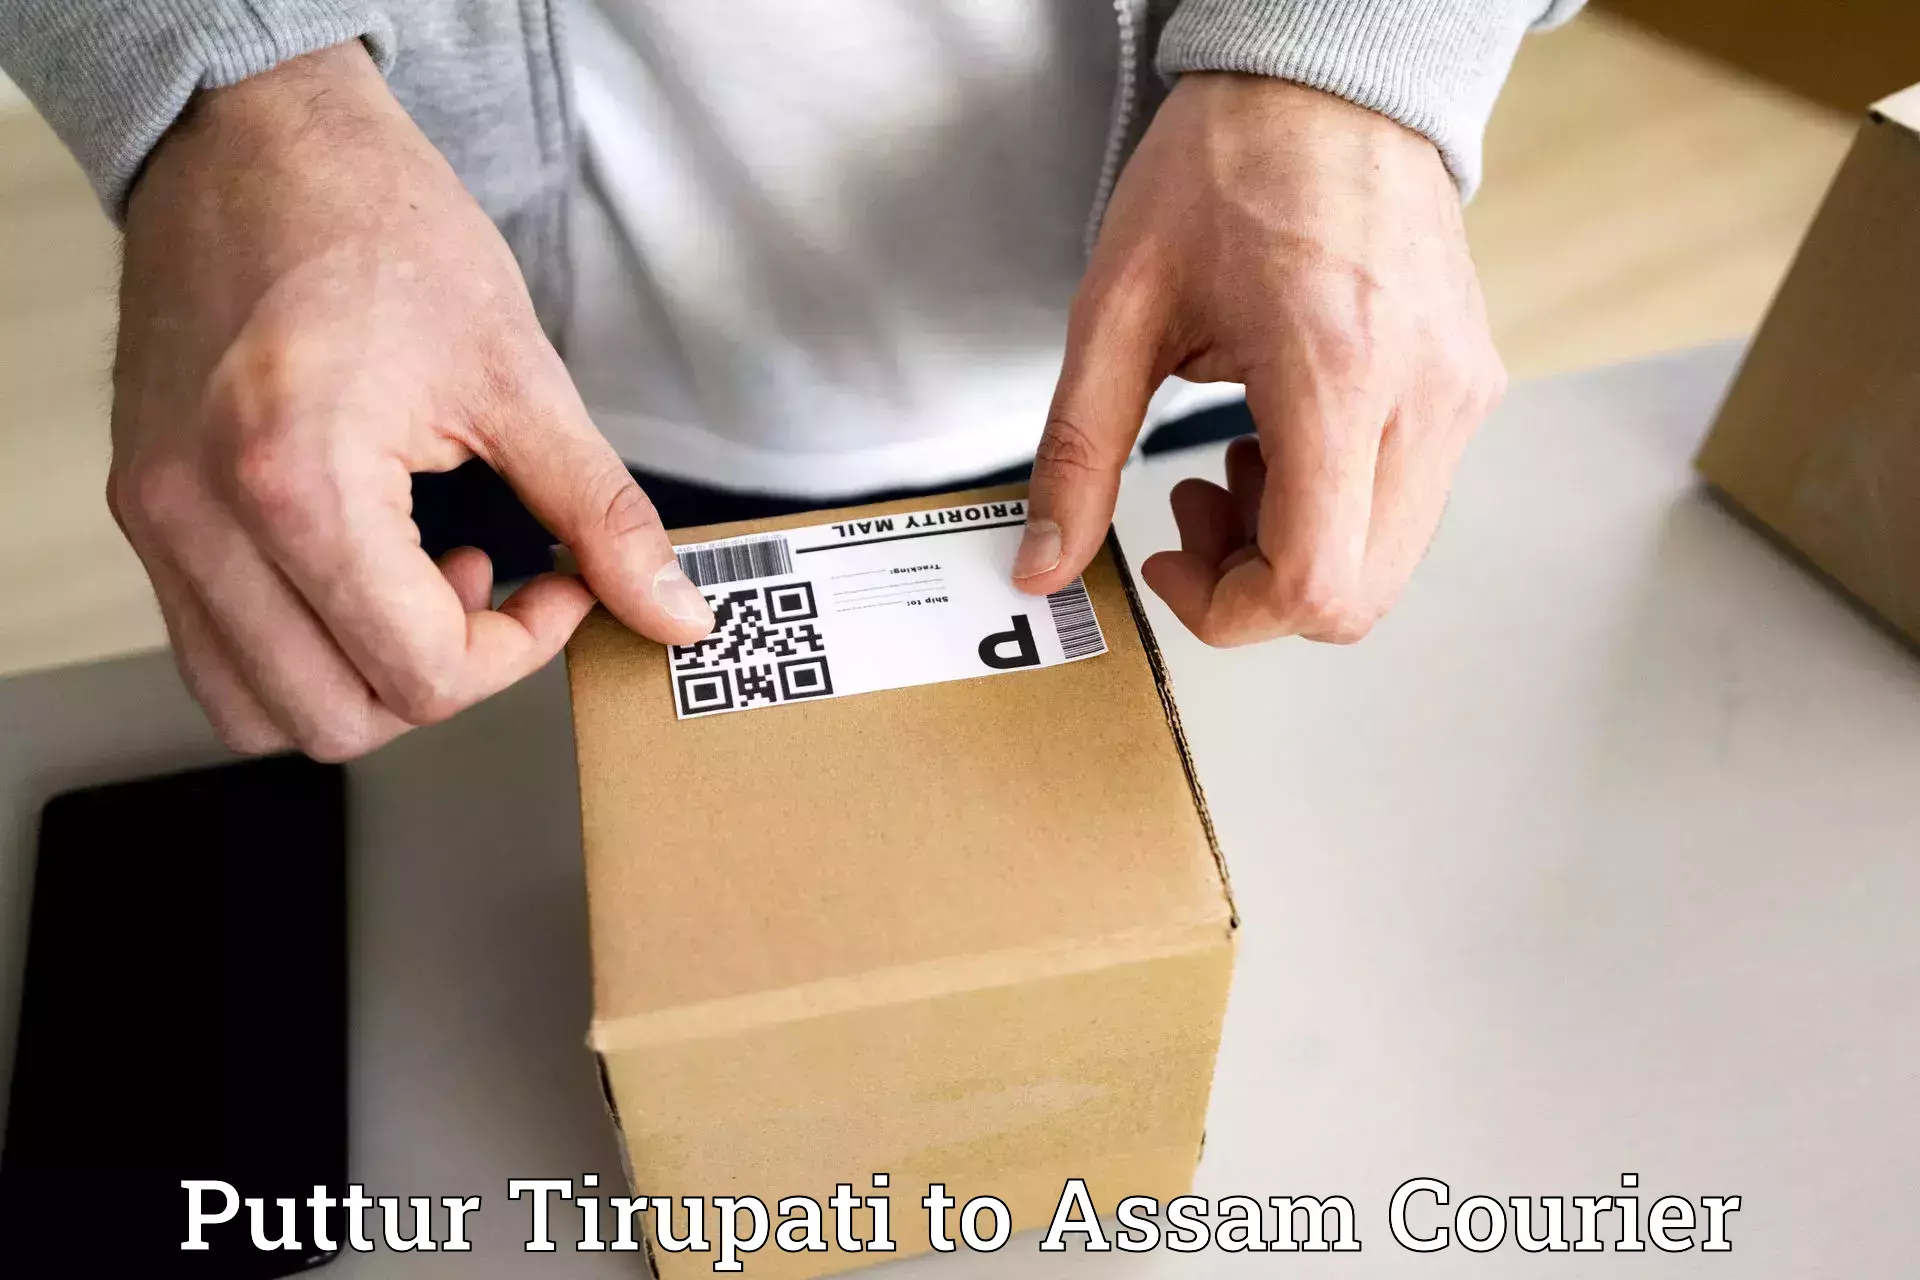 Efficient package consolidation Puttur Tirupati to Guwahati University